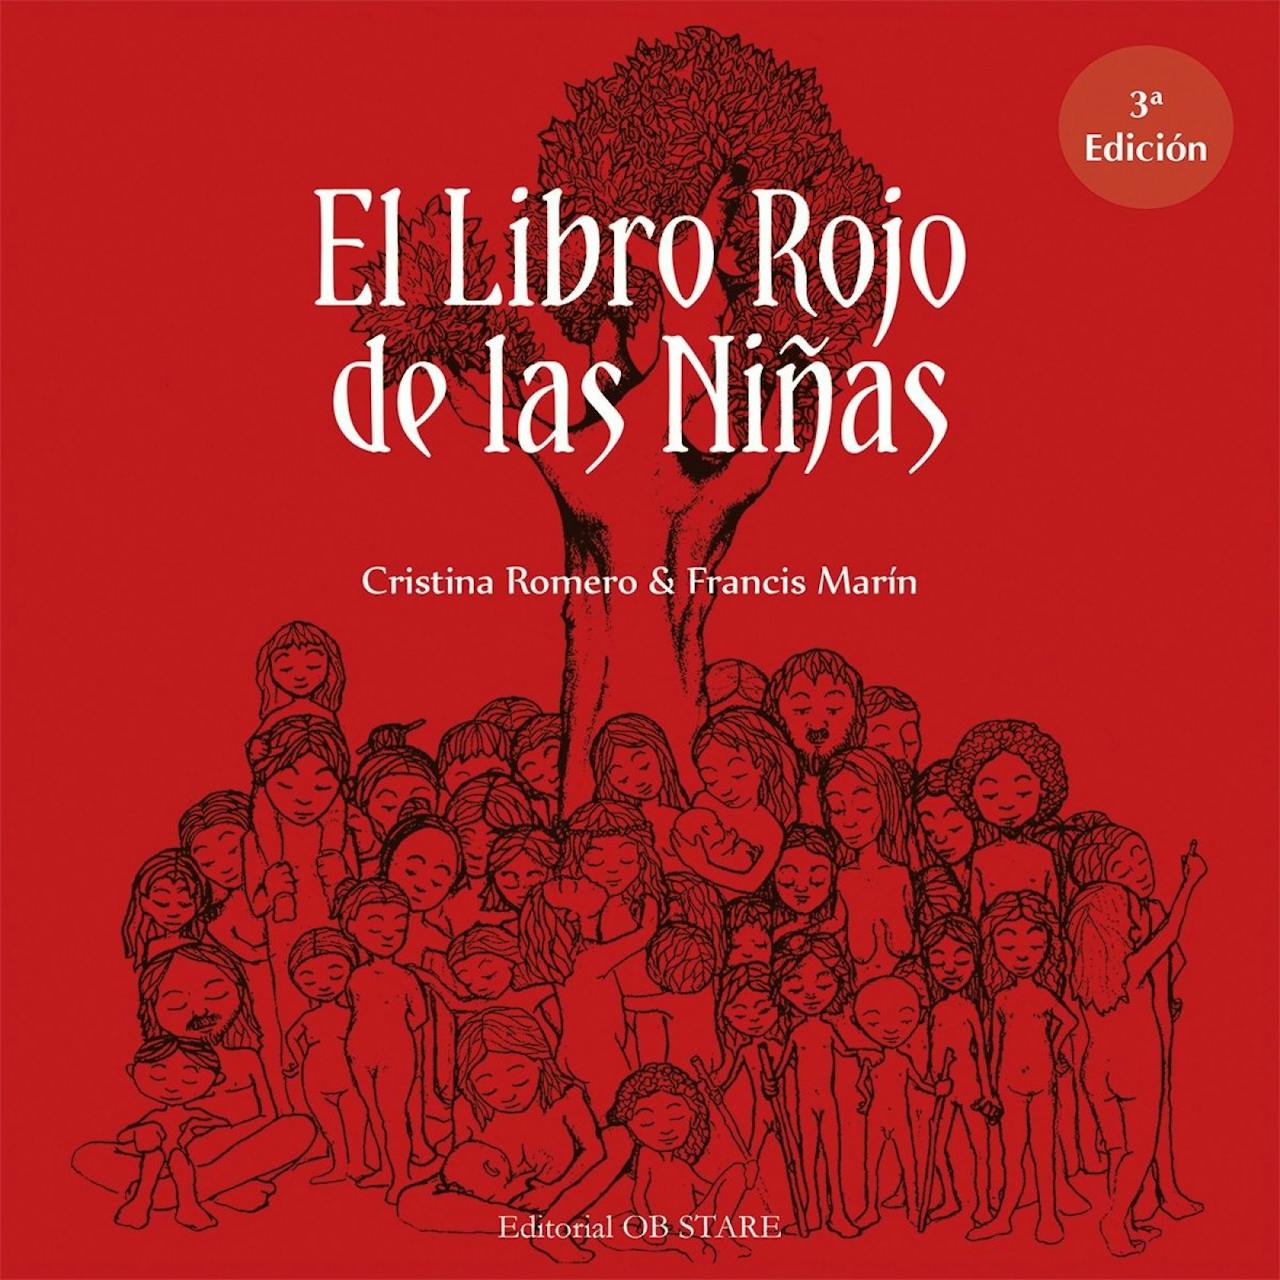 El libro rojo de las niñas de Cristina Romero.